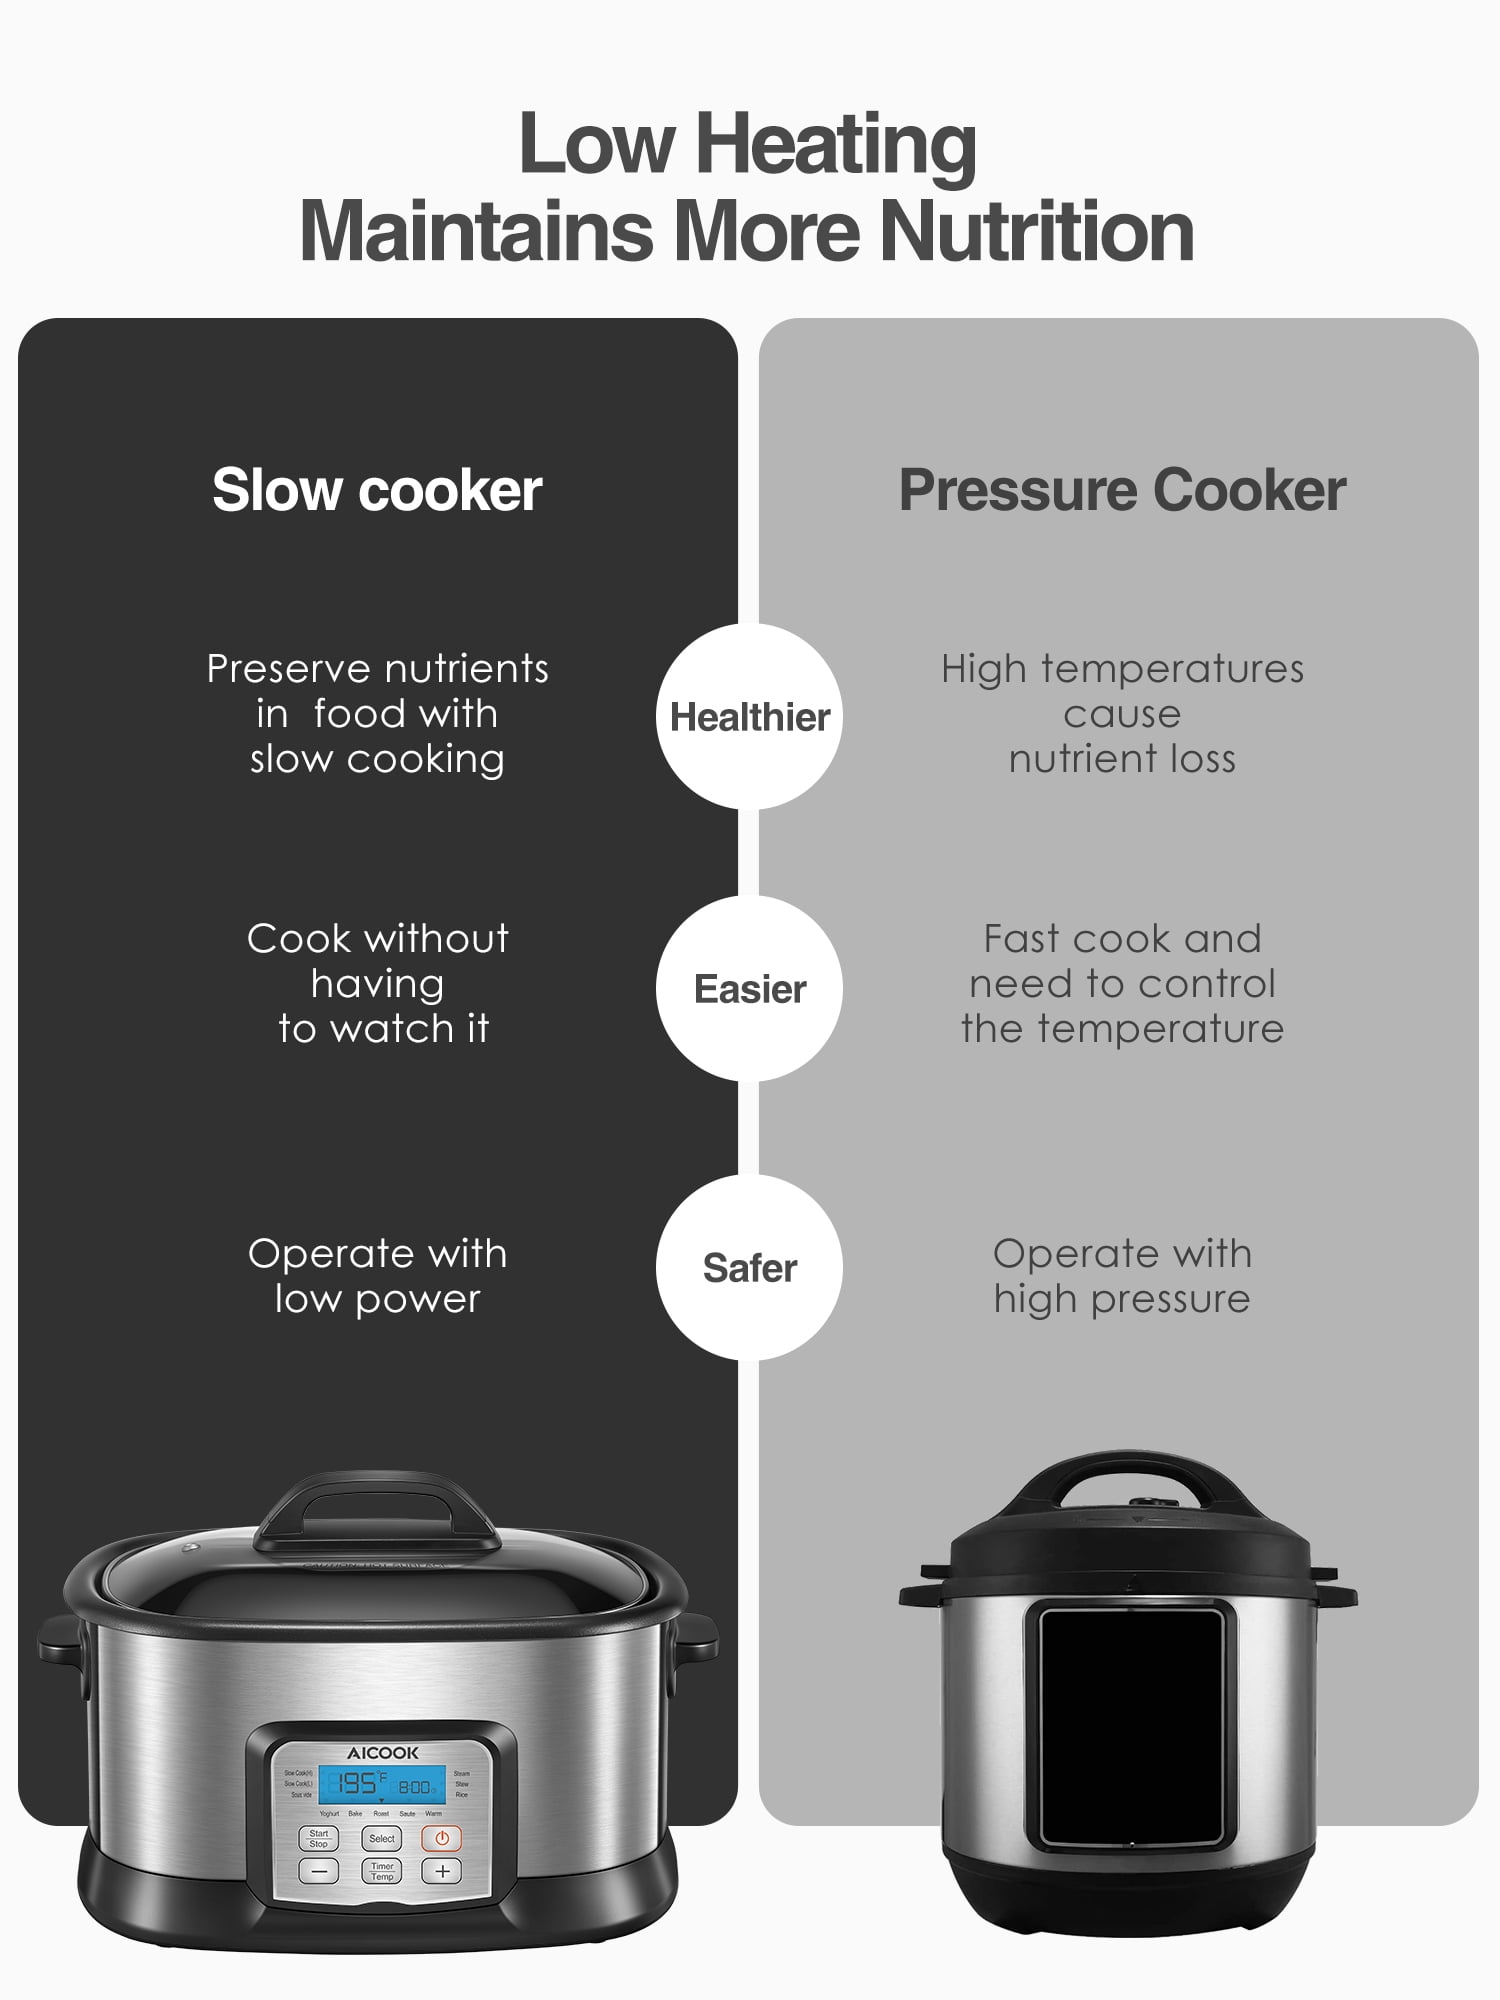 AICOOK 18-in-1 Pressure Cooker, 6 Quart, Slow Cooker, Rice Cooker